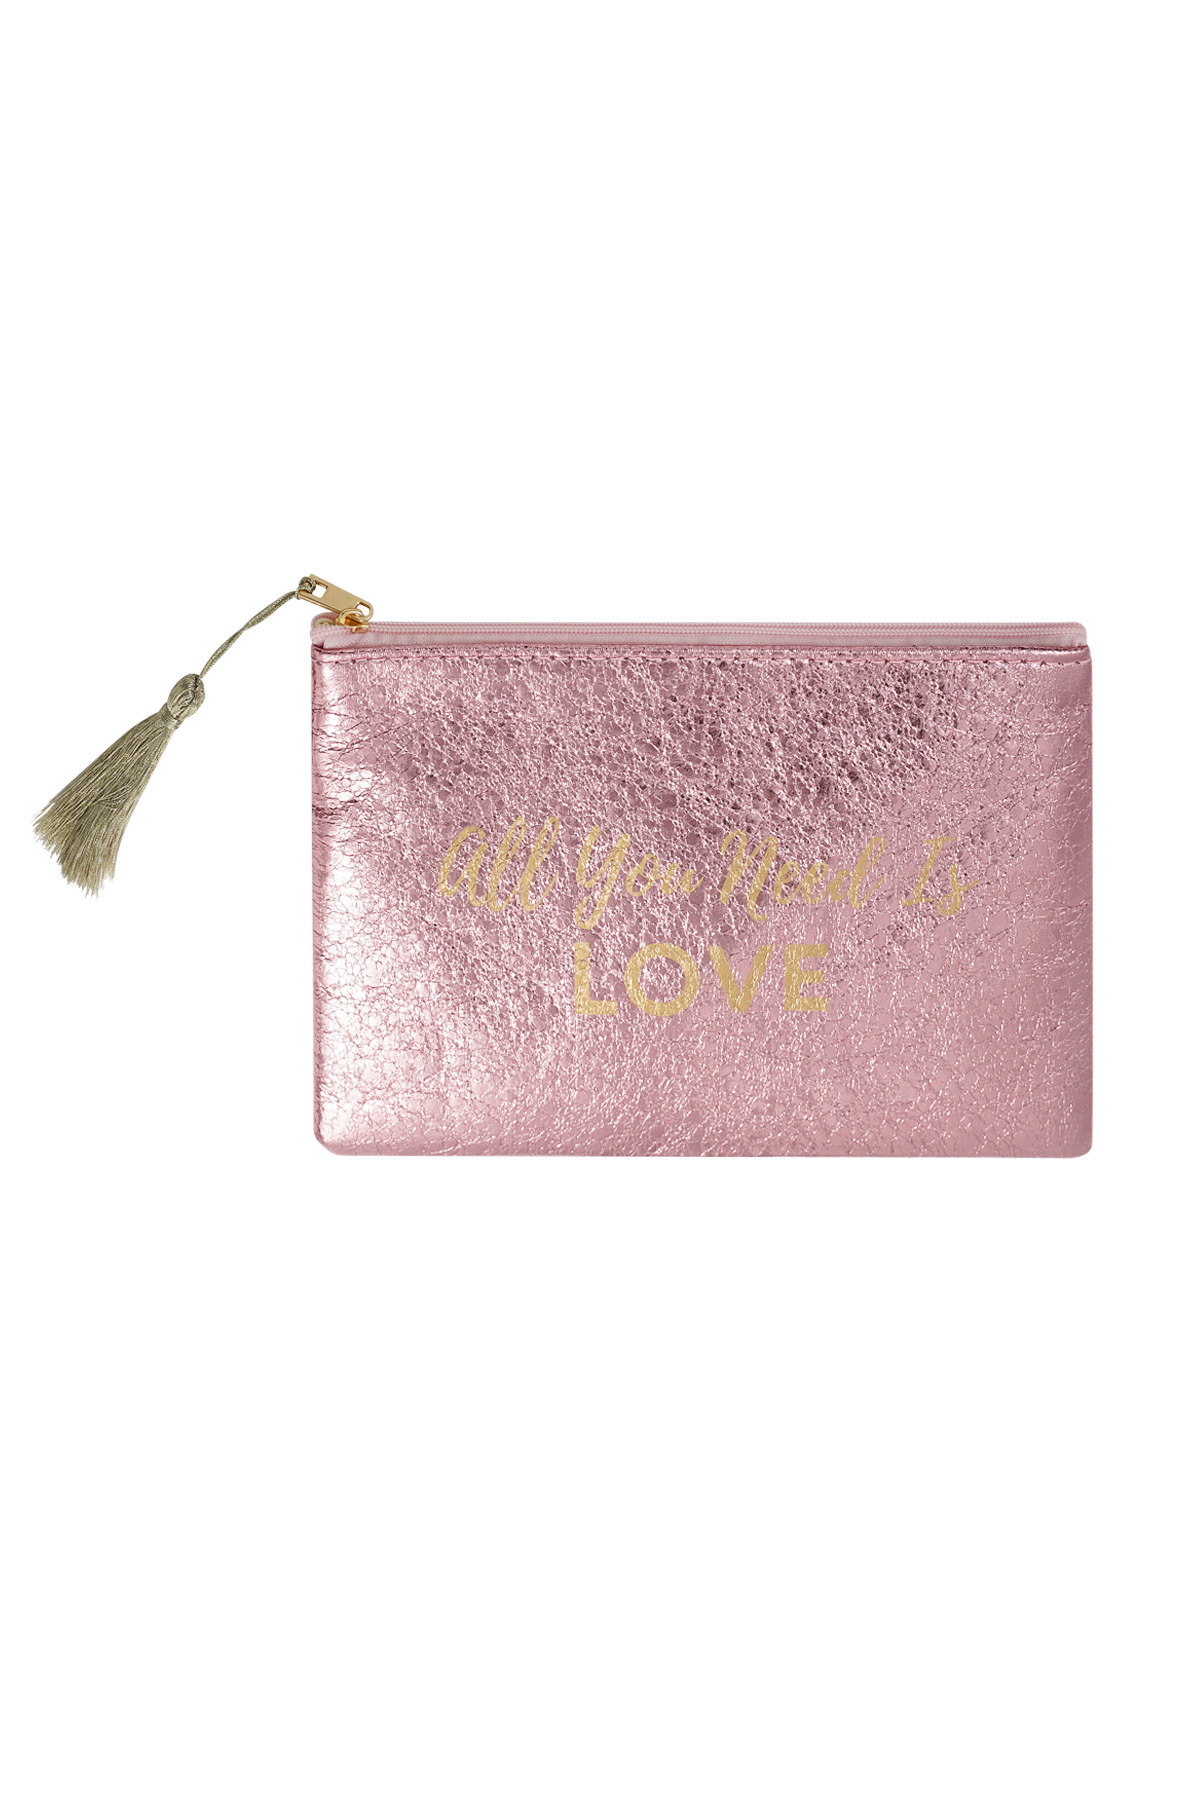 Make-up bag metallic all you need is love - pink